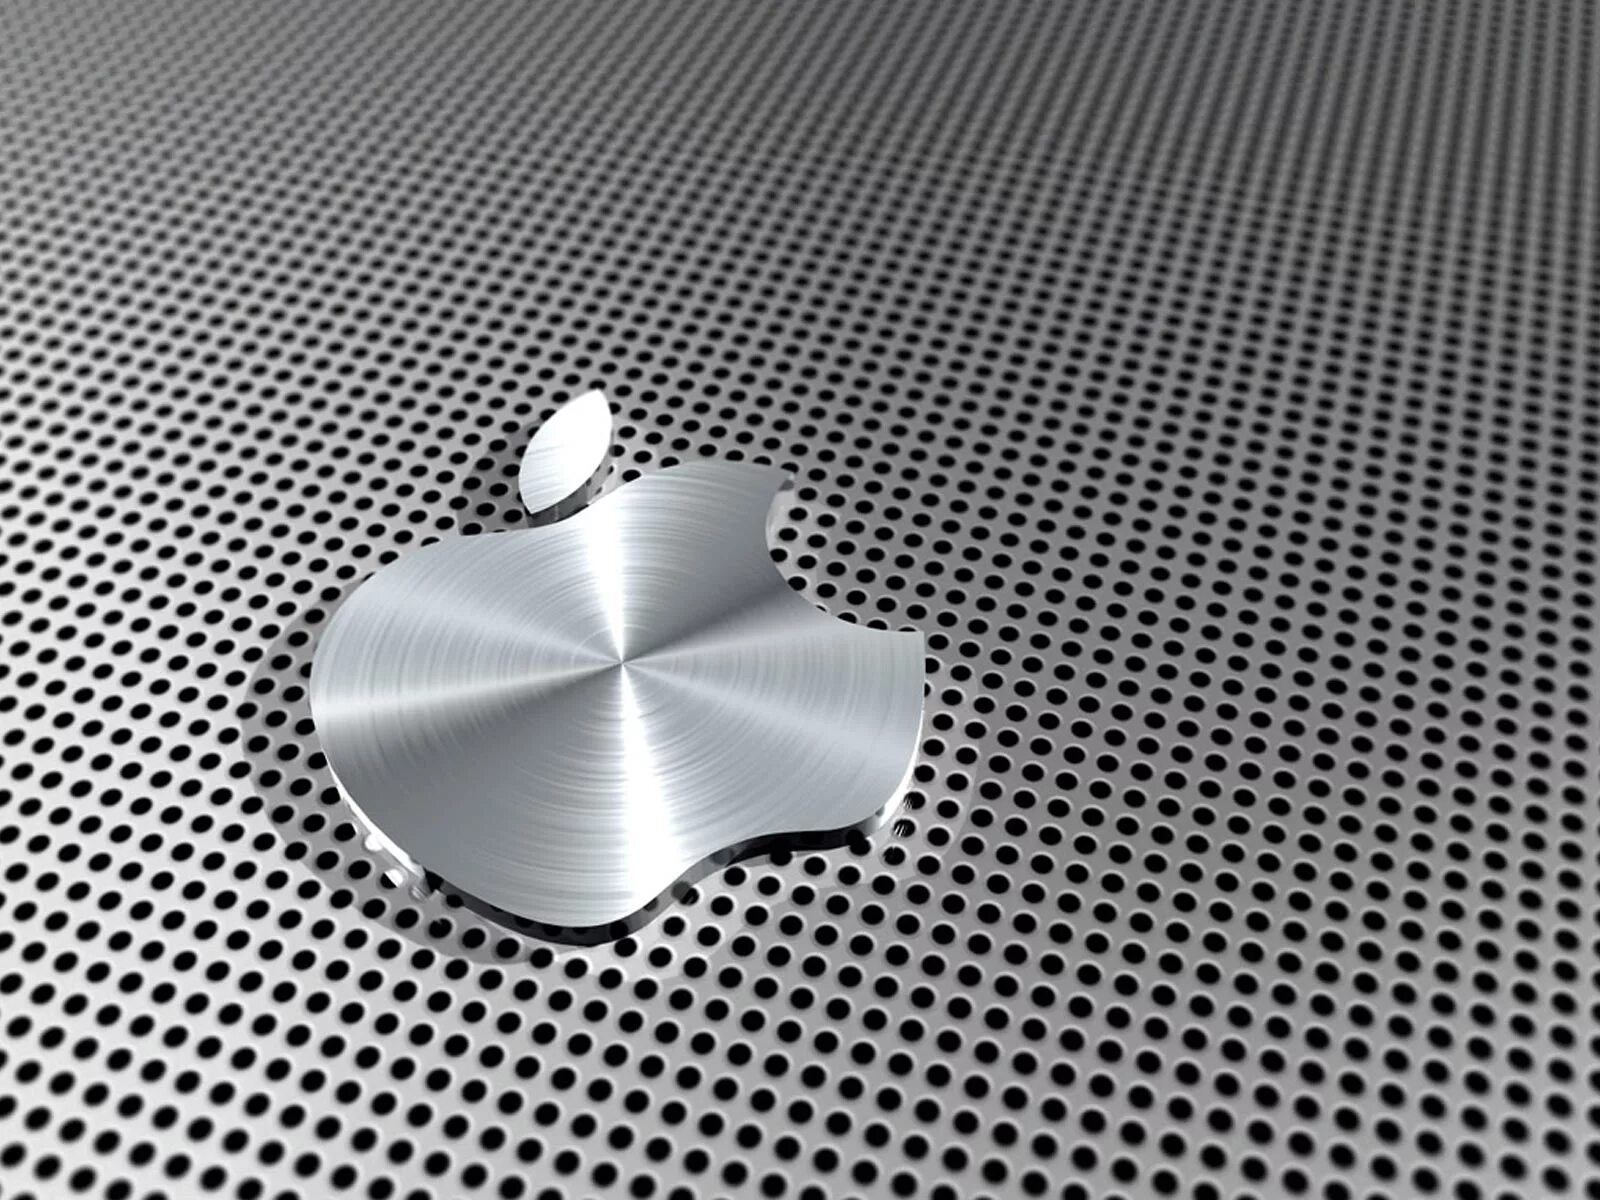 Apple алюминий цвета. Эппл. Обои Apple. Металлический логотип Apple. Заставка на айфон.